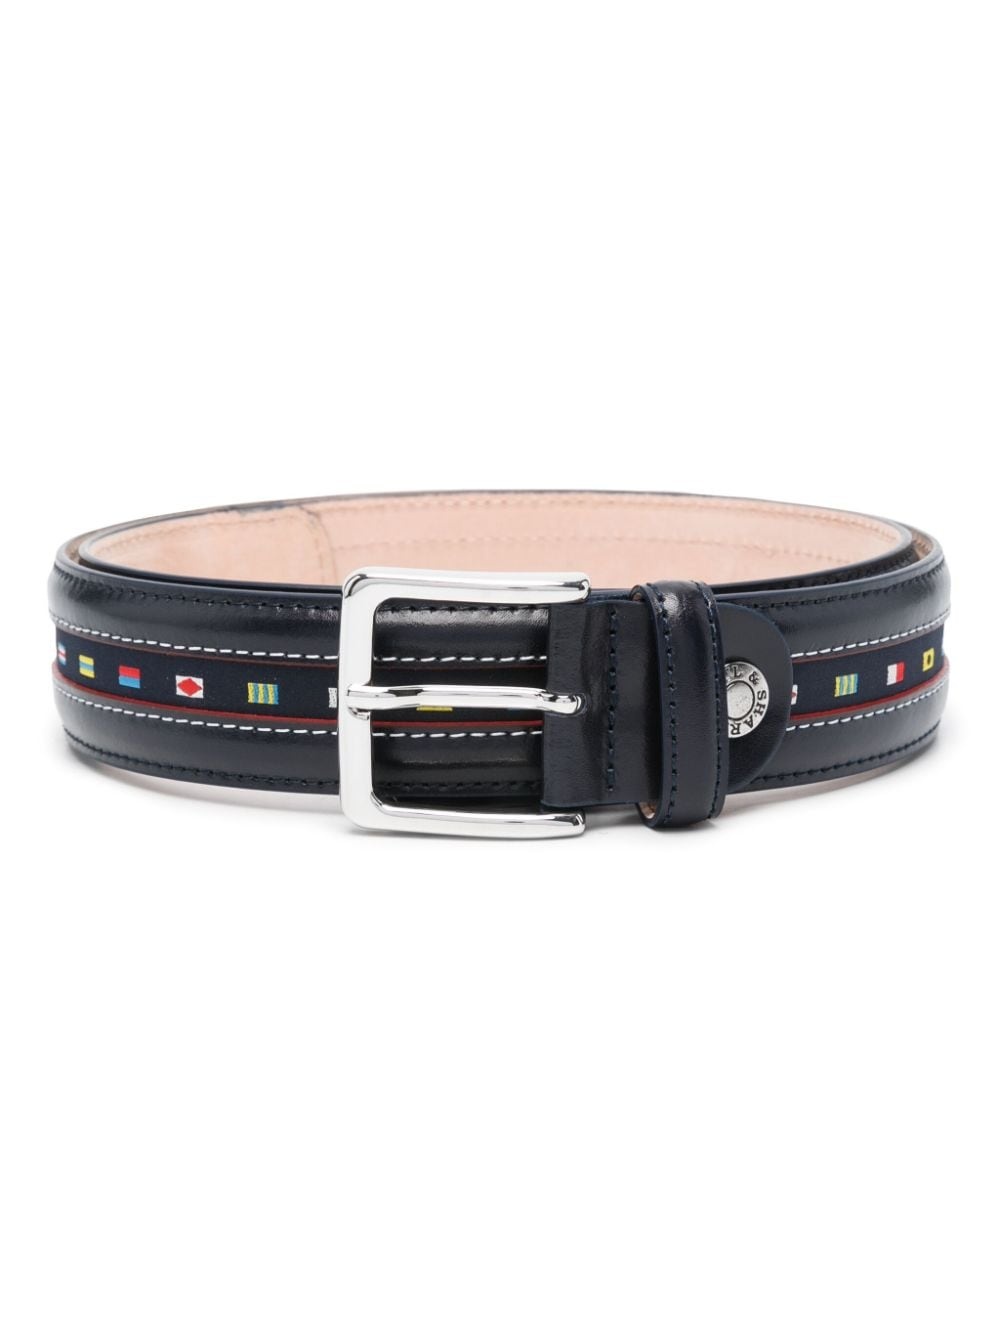 embroidered-motif leather belt - 1